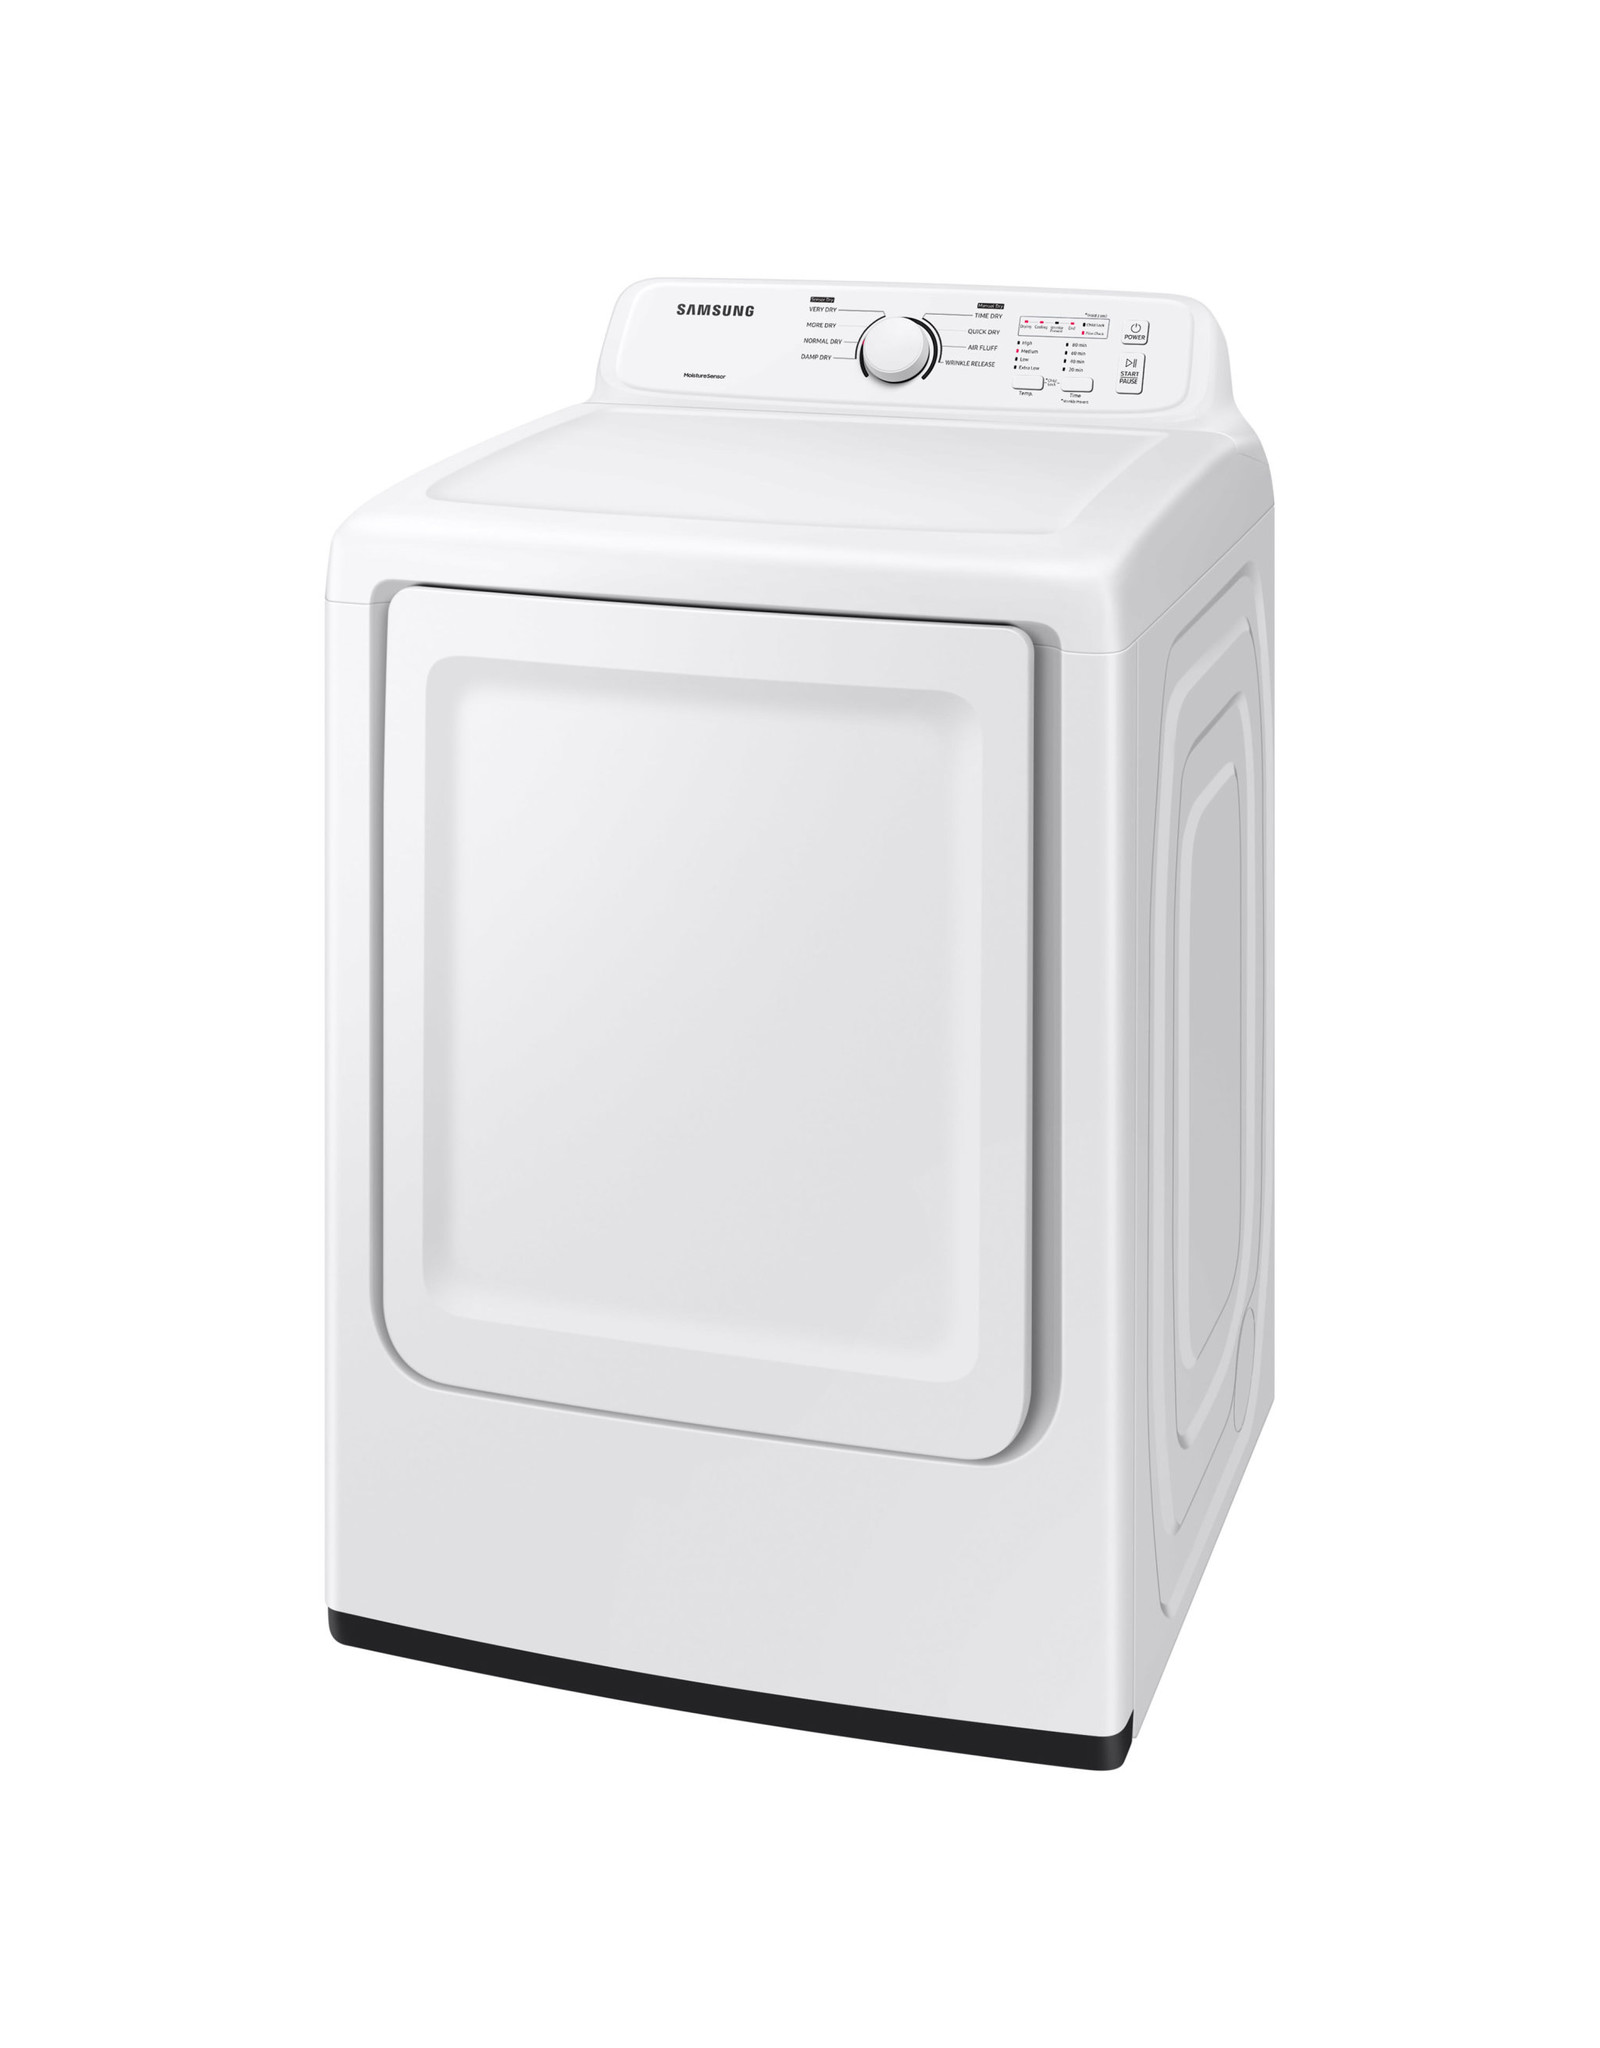 SAMSUNG DVE41A3000W  7.2 cu. ft. 240-Volt White Electric Dryer with Sensor Dry